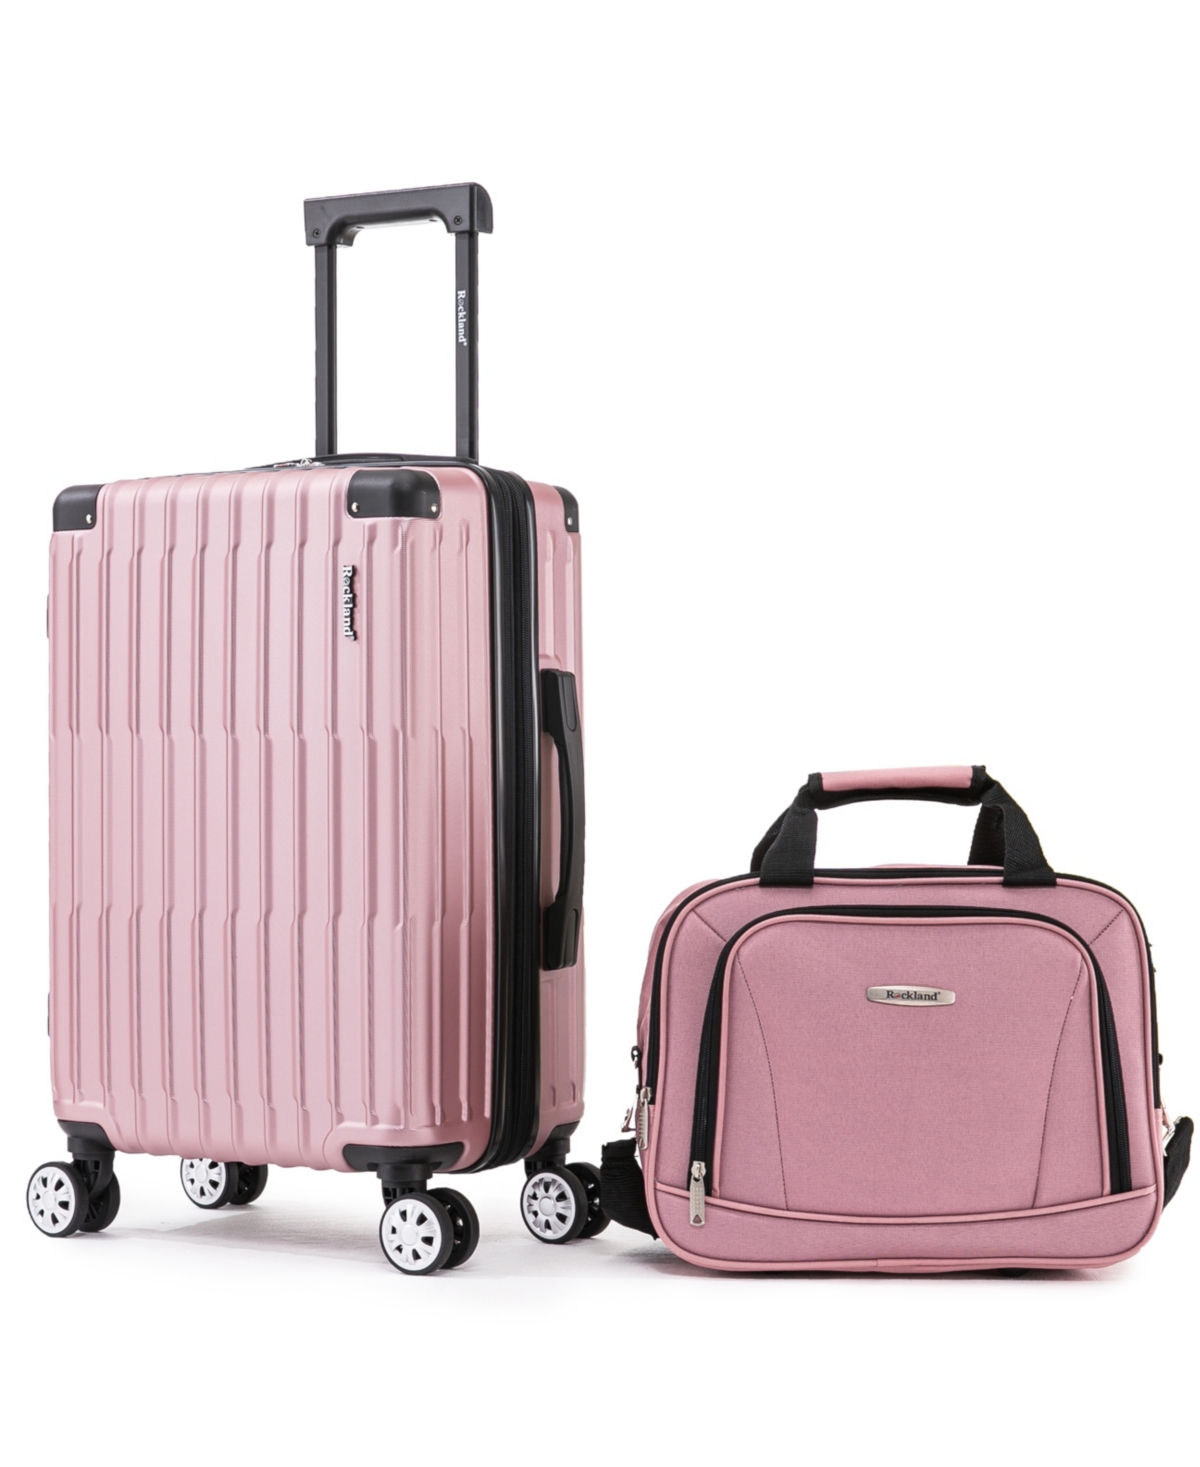 Rockland Napa Valley Luggage Set, 2 Piece In Pink